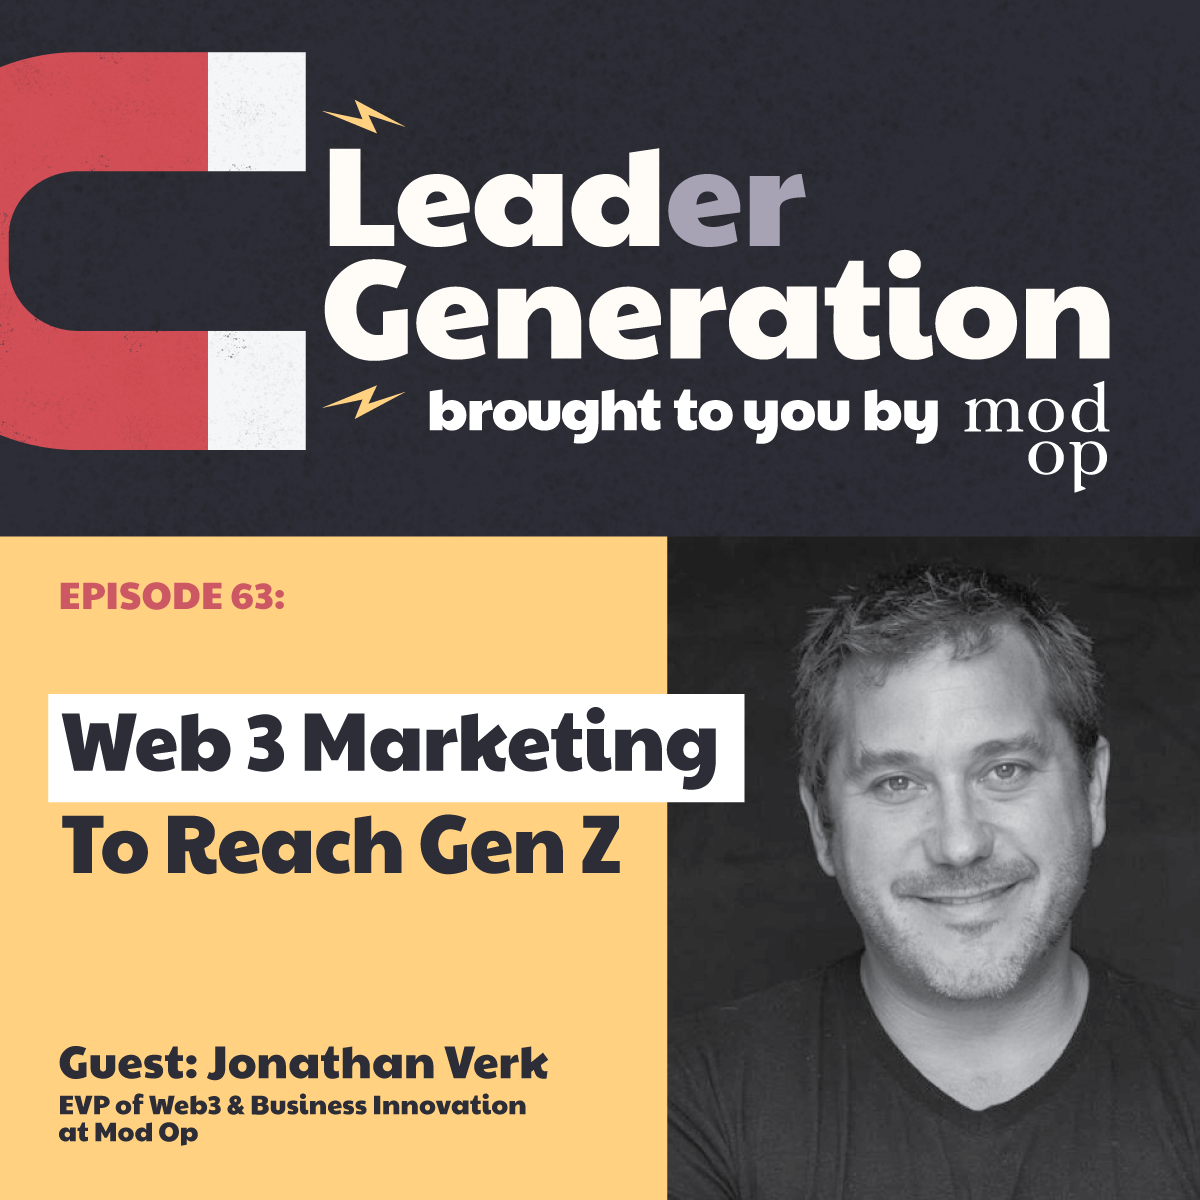 Web 3 Marketing To Reach Gen Z